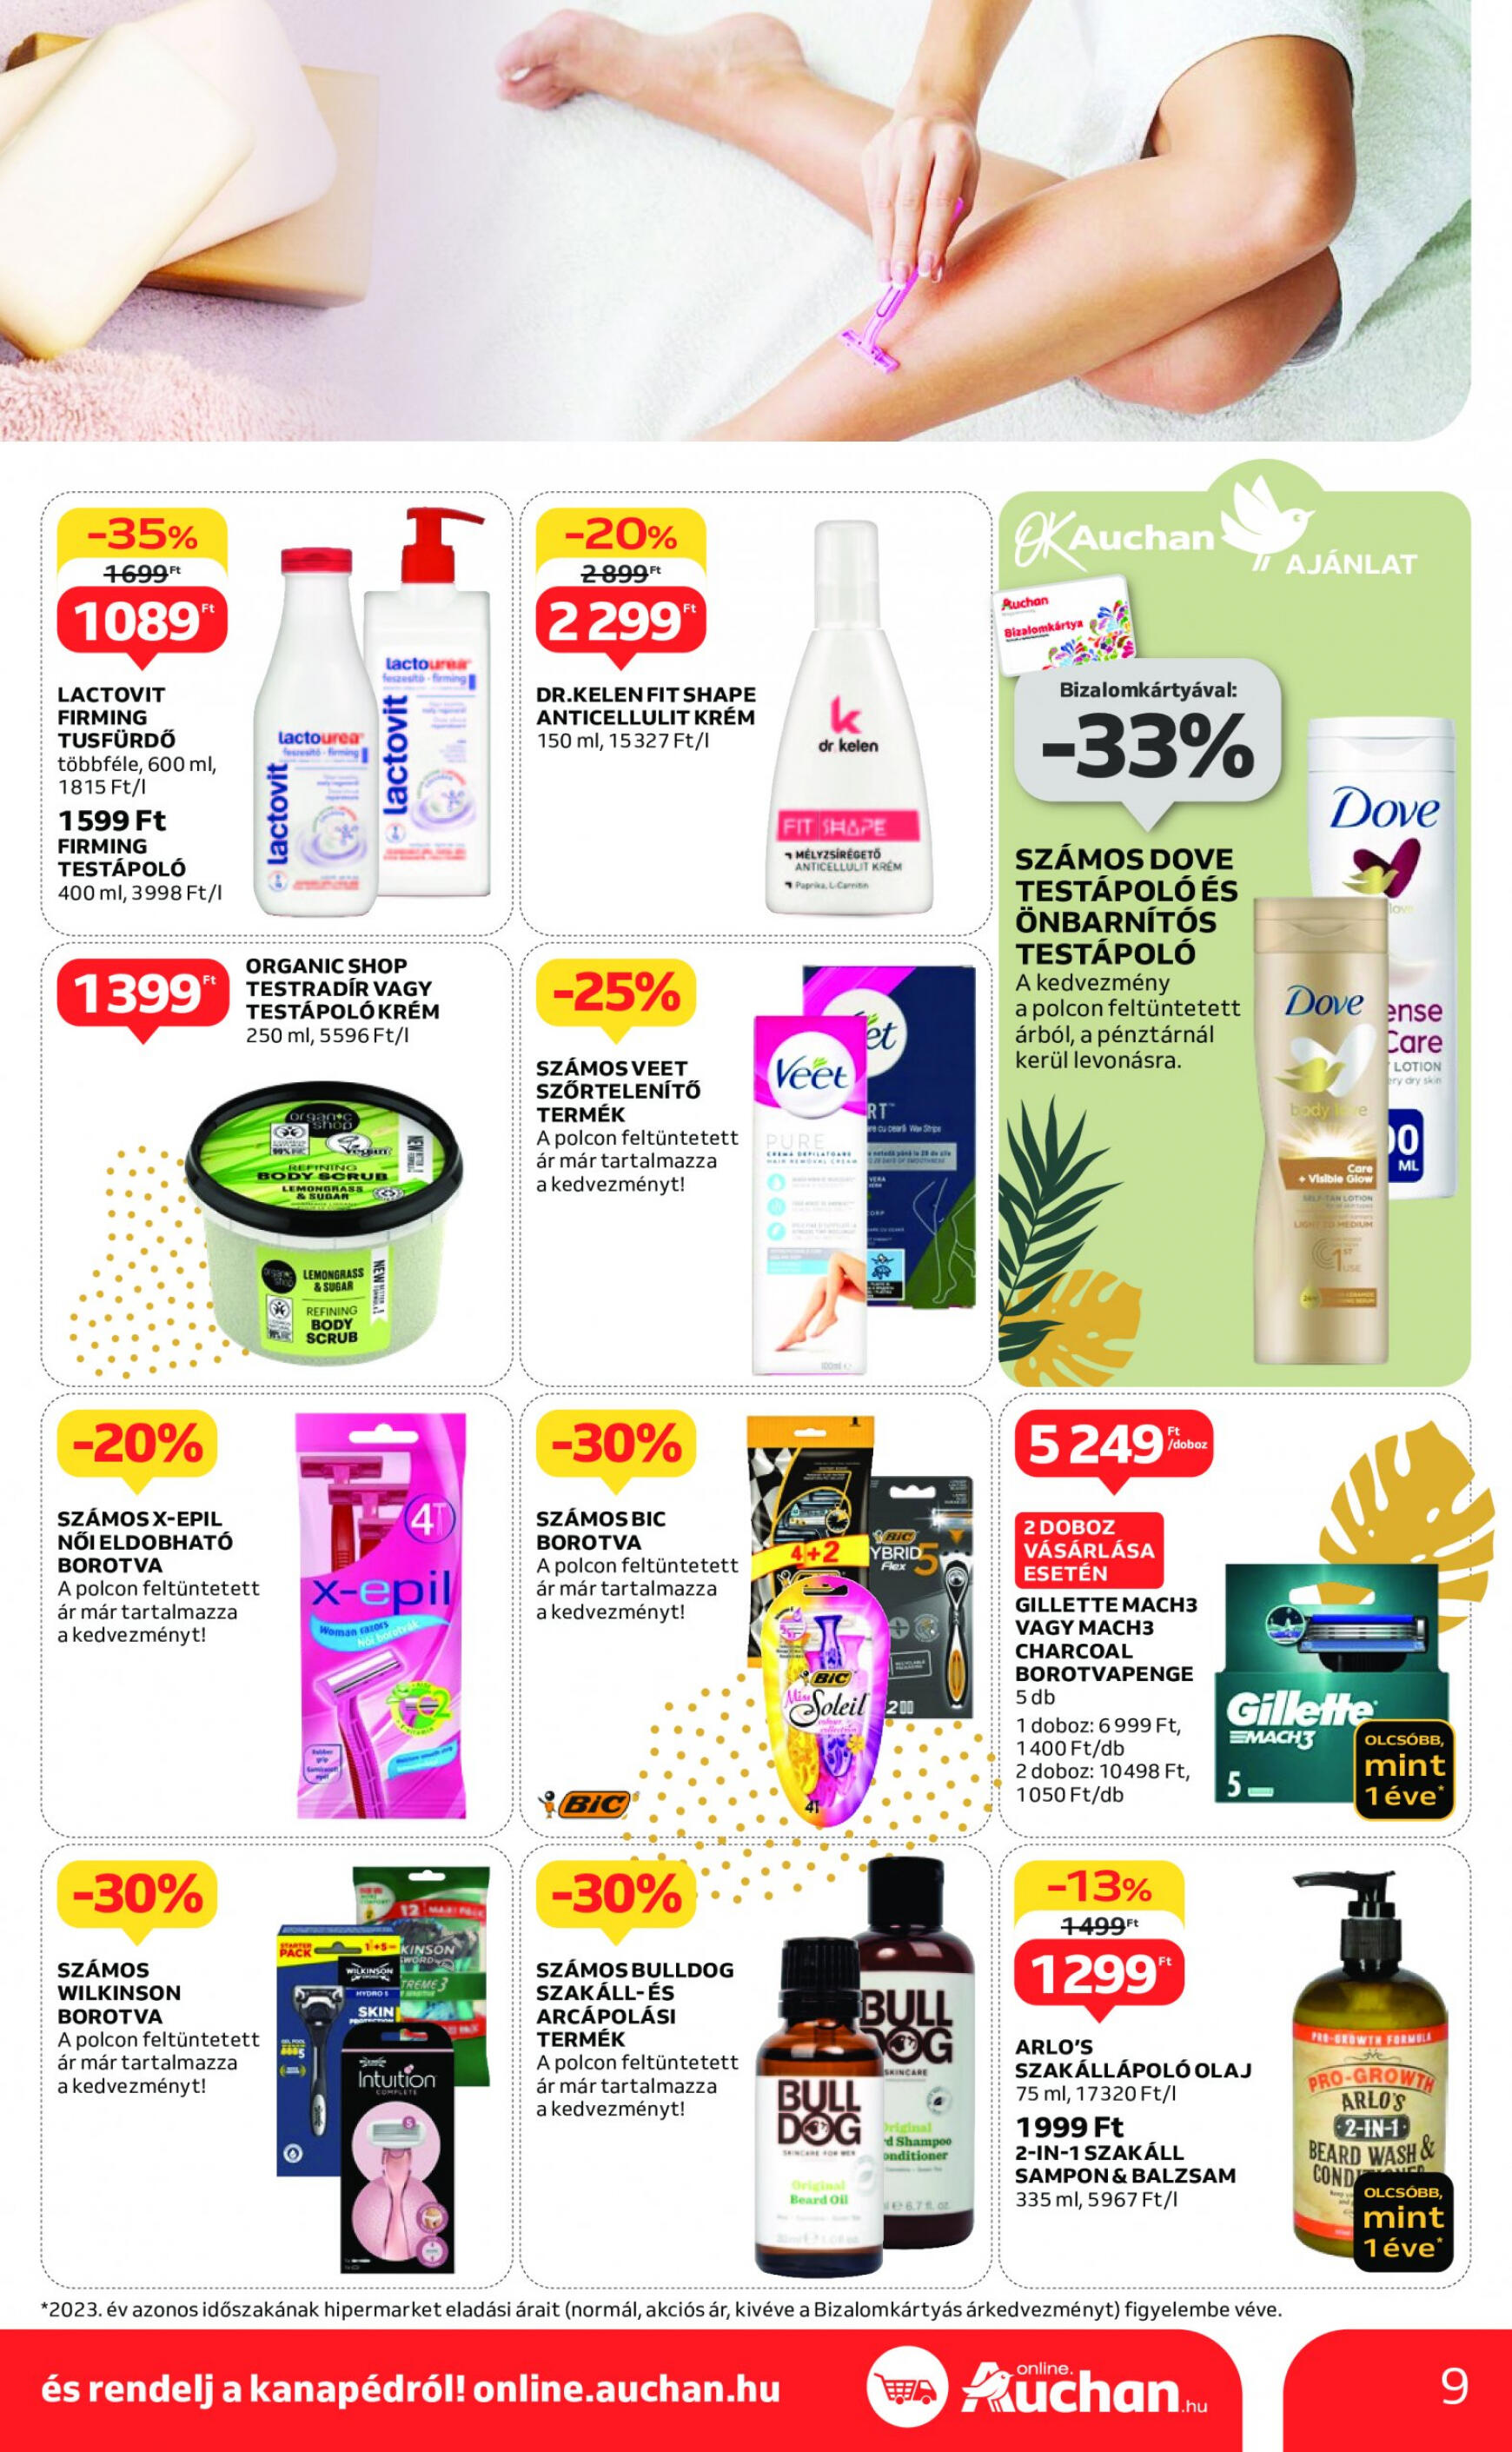 auchan - Aktuális újság Auchan 05.09. - 05.22. - page: 9